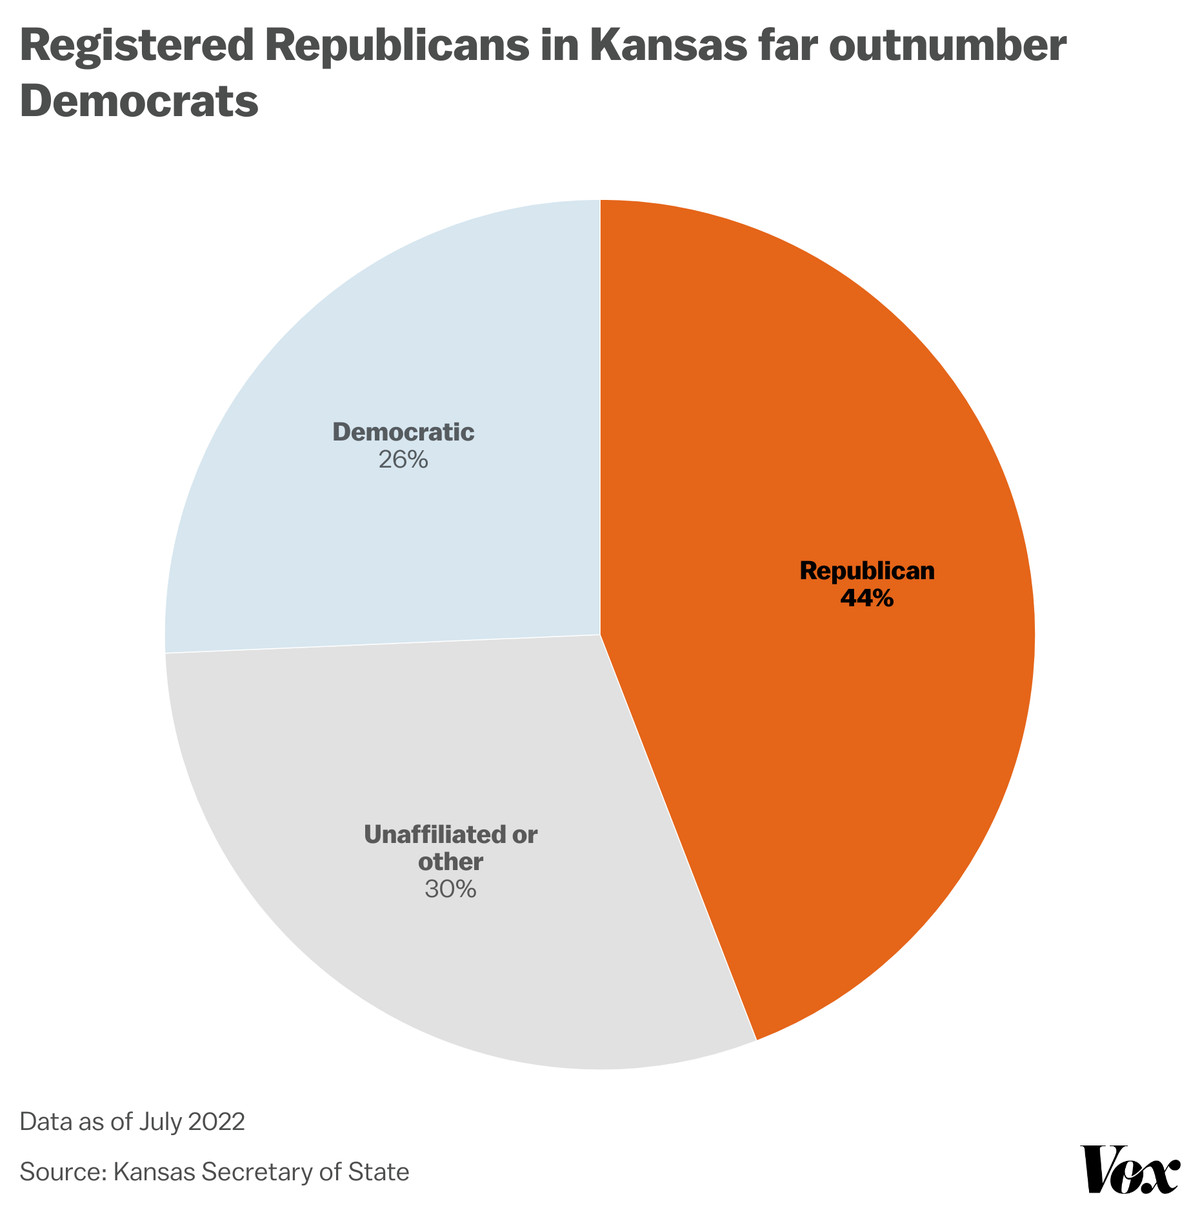 Registered Republicans in Kansas far outnumber Democrats. Democrats are 26% while Republicans are 44% of registered voters. 